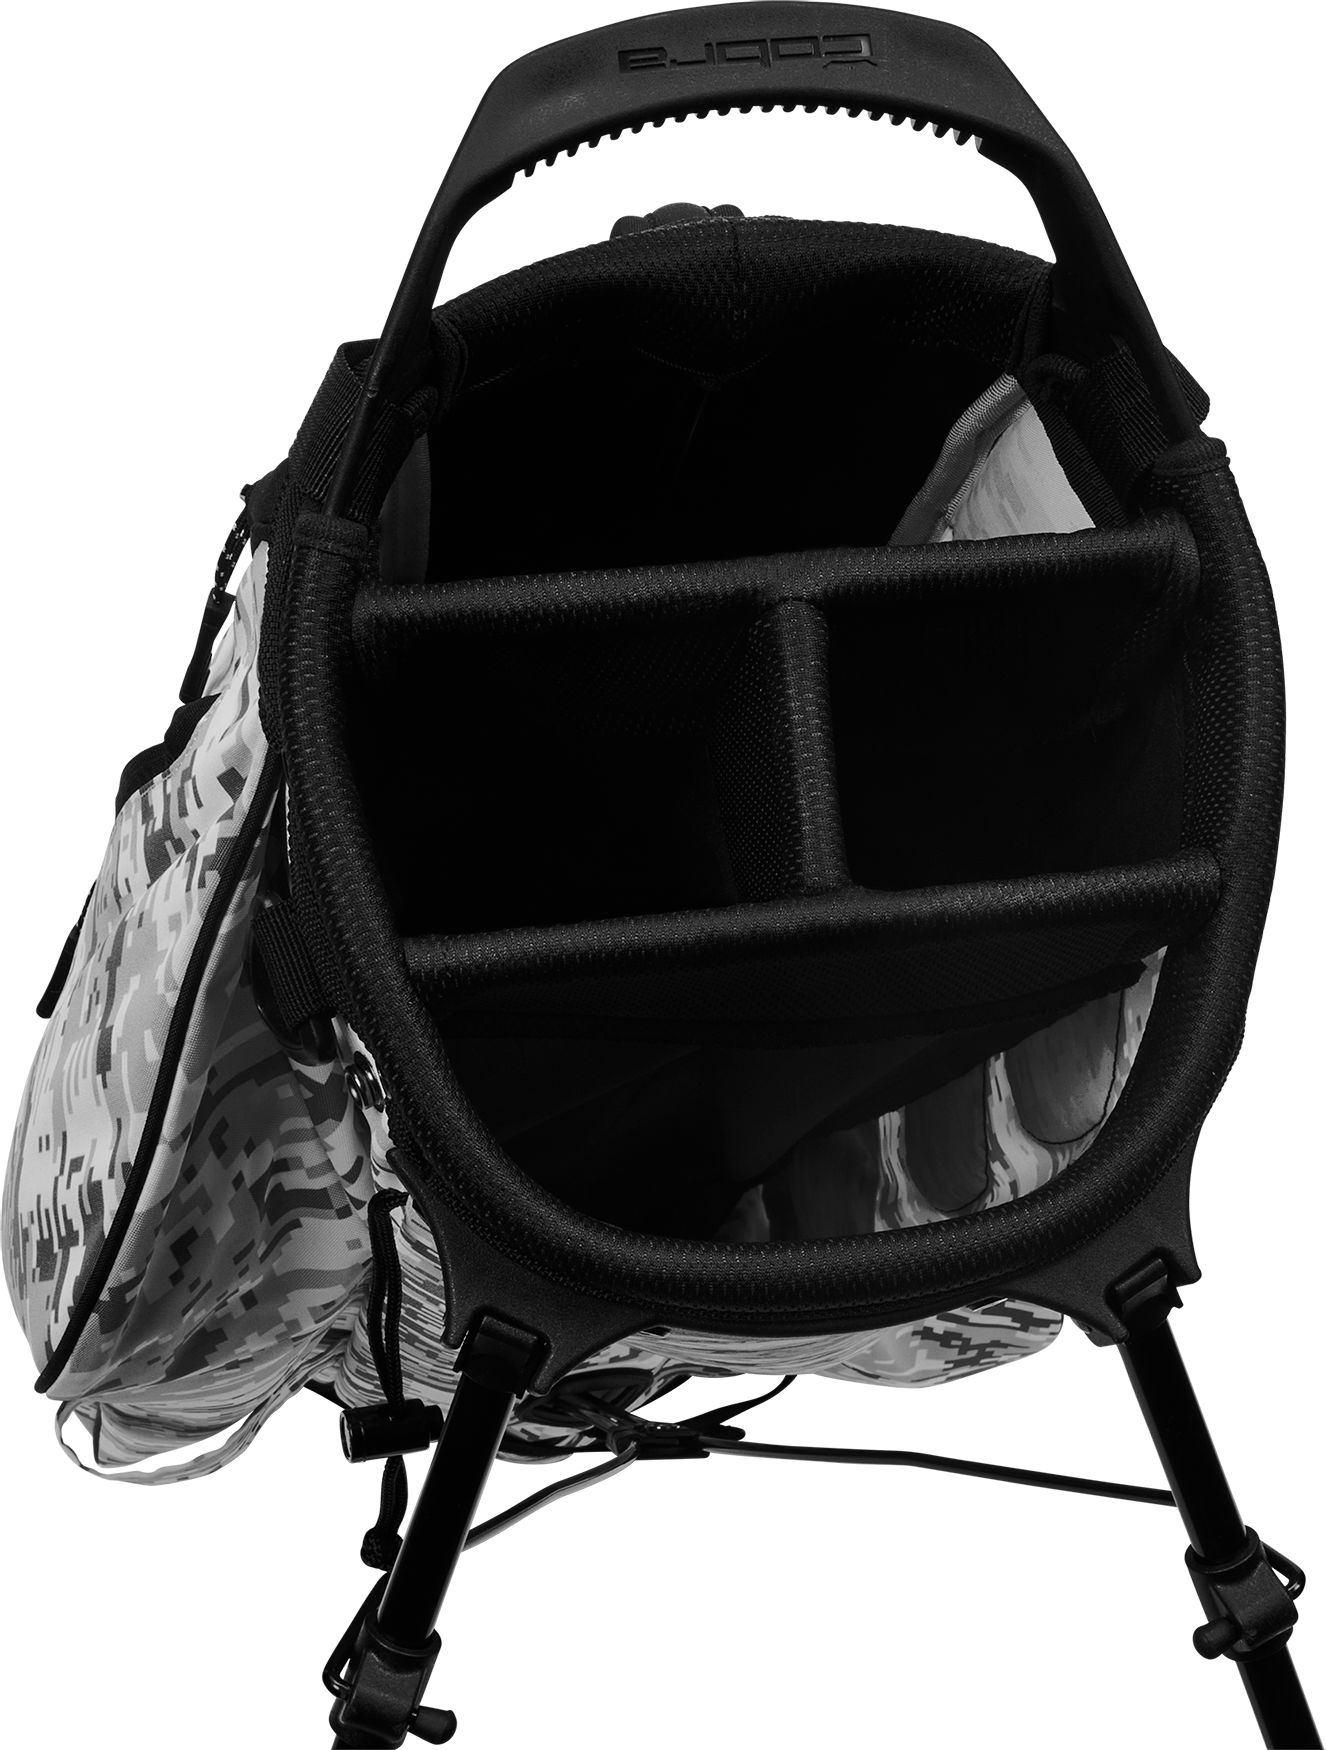 COBRA, Ultralight Pro Stand Bag